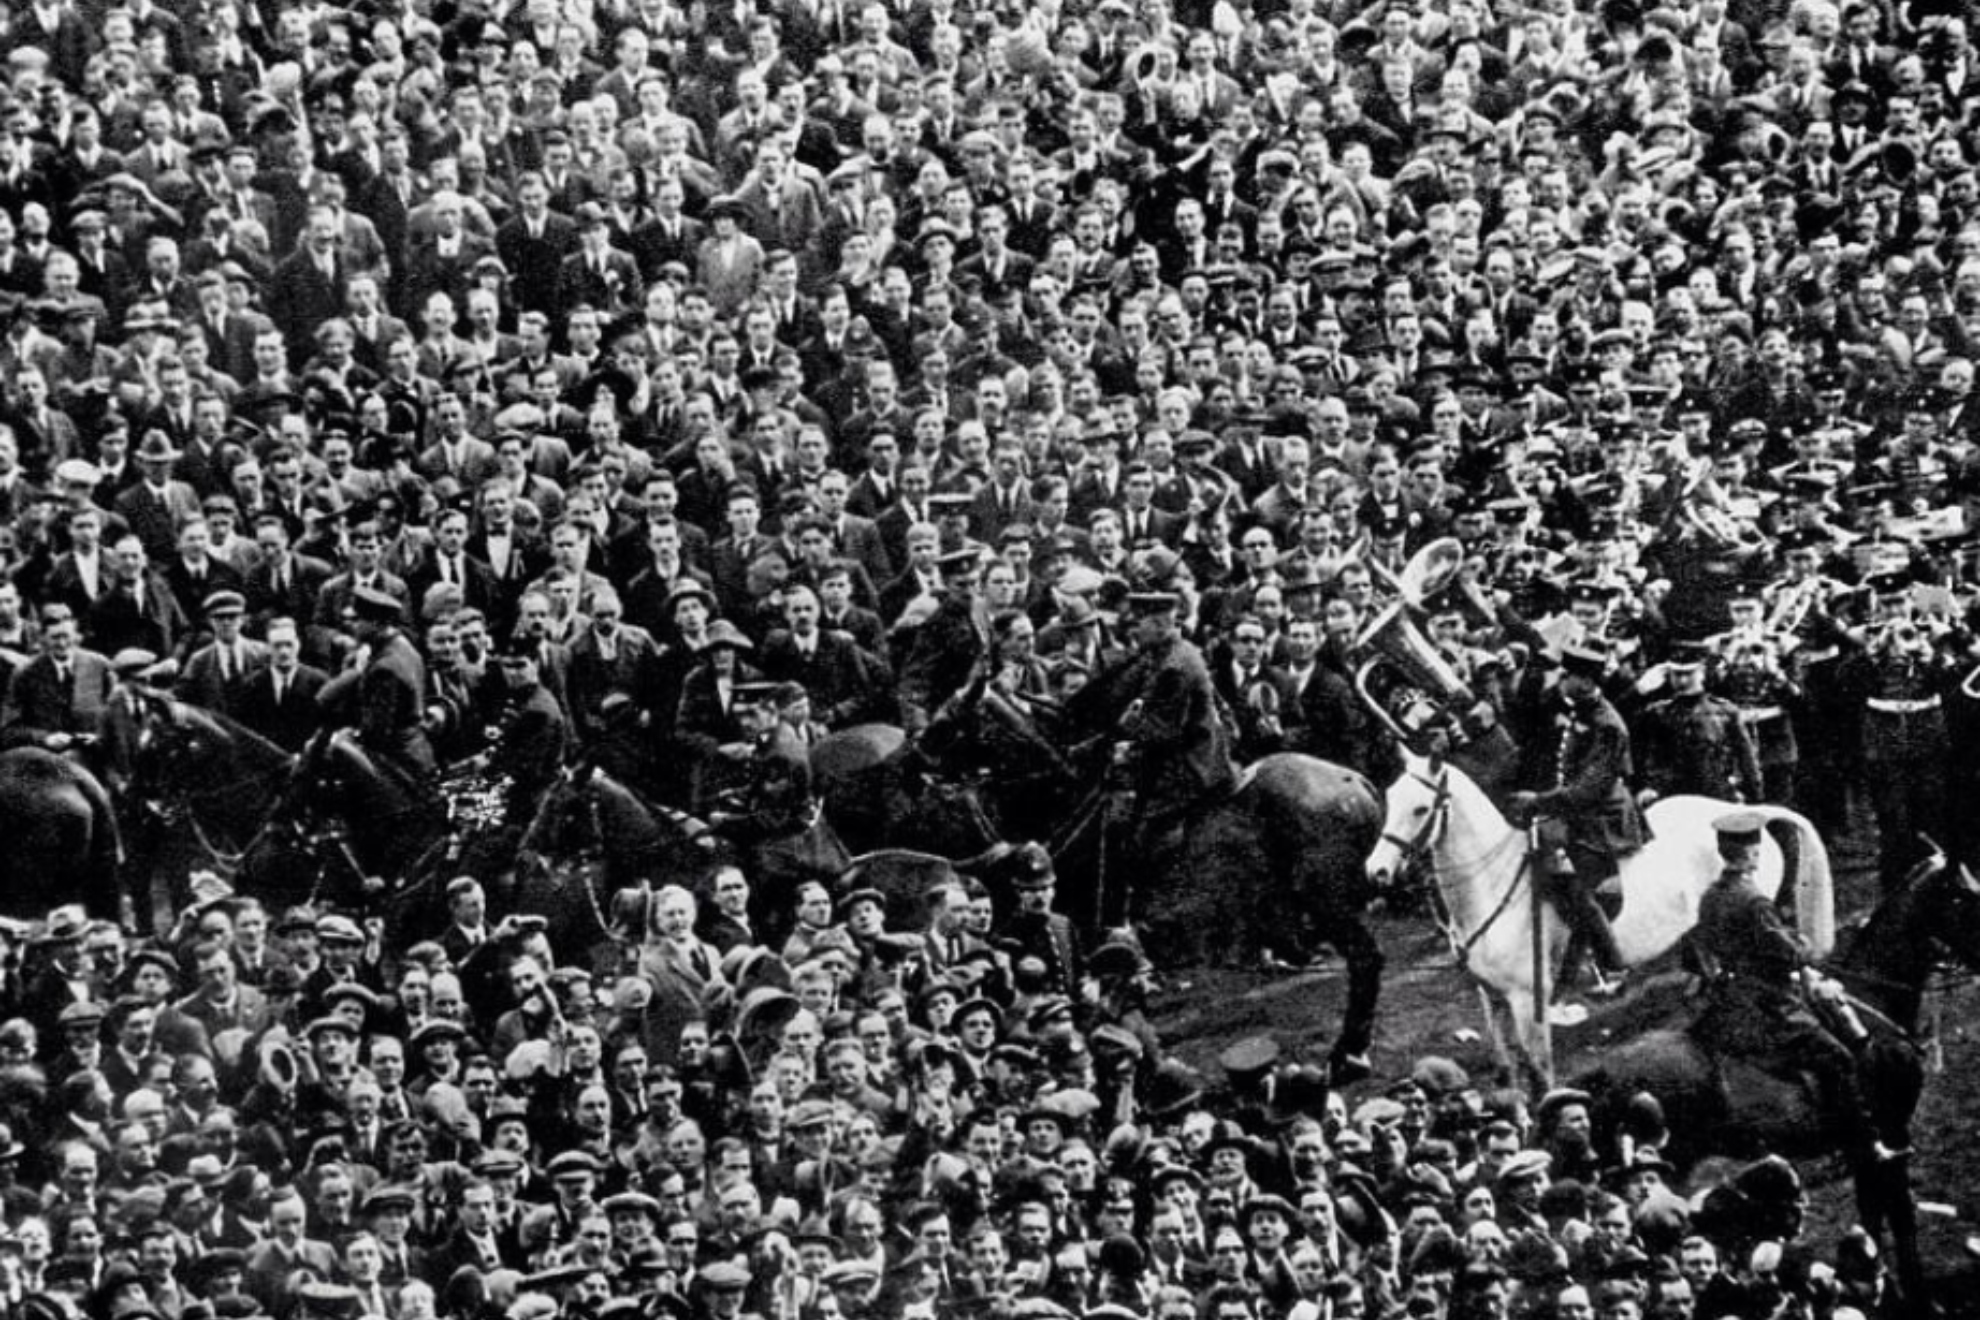 La m�tica foto de la polic�a sacando a la multitud del c�sped de Wembley